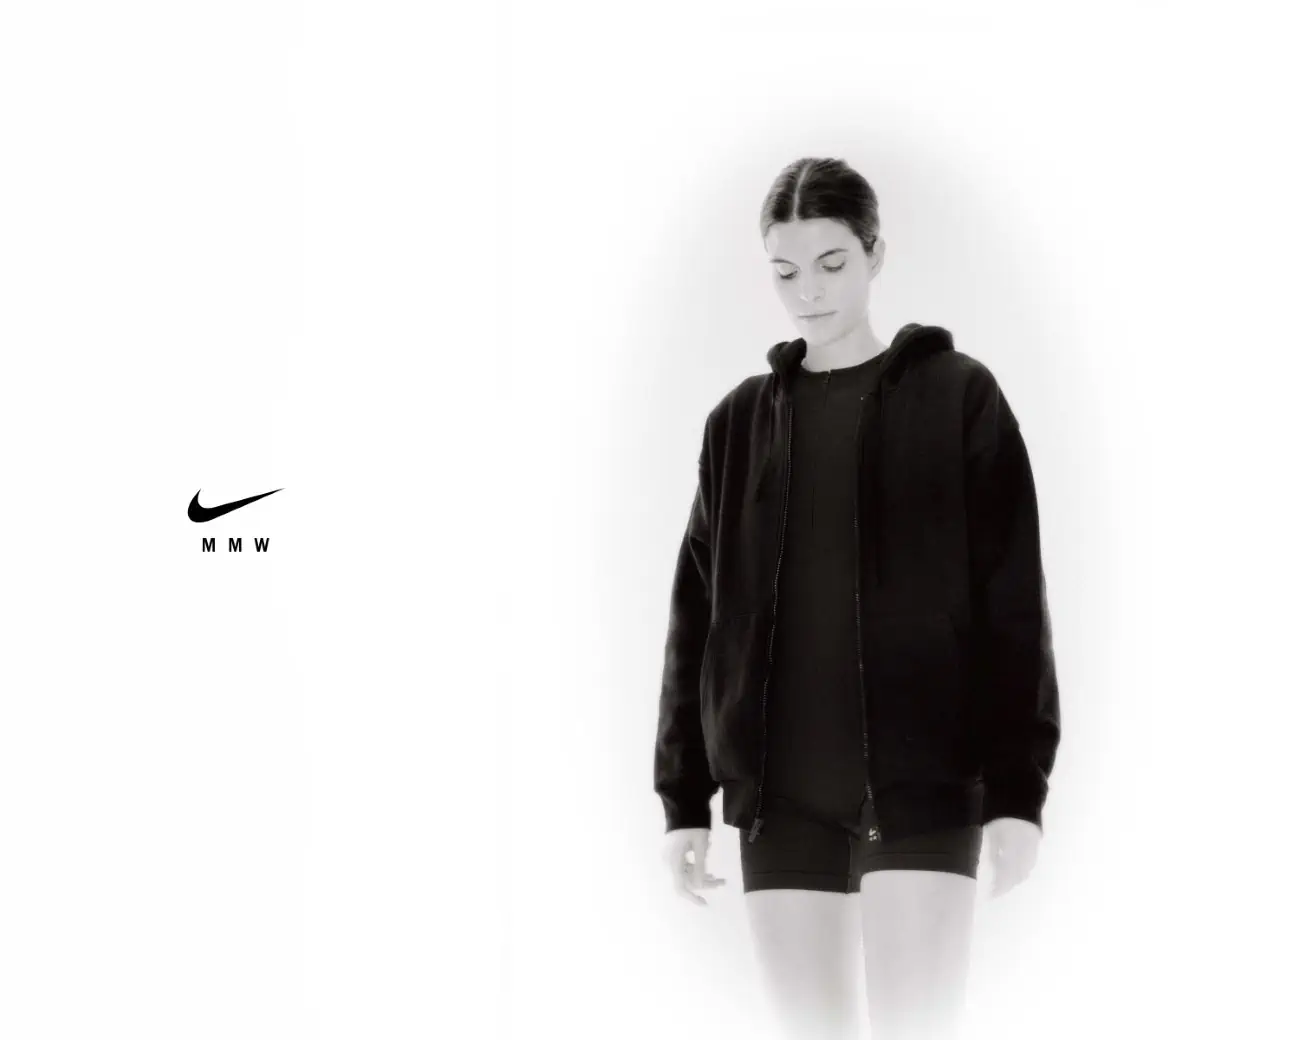 Matthew M. Williams and Nike collaborate on new MMW x Nike Yoga collection